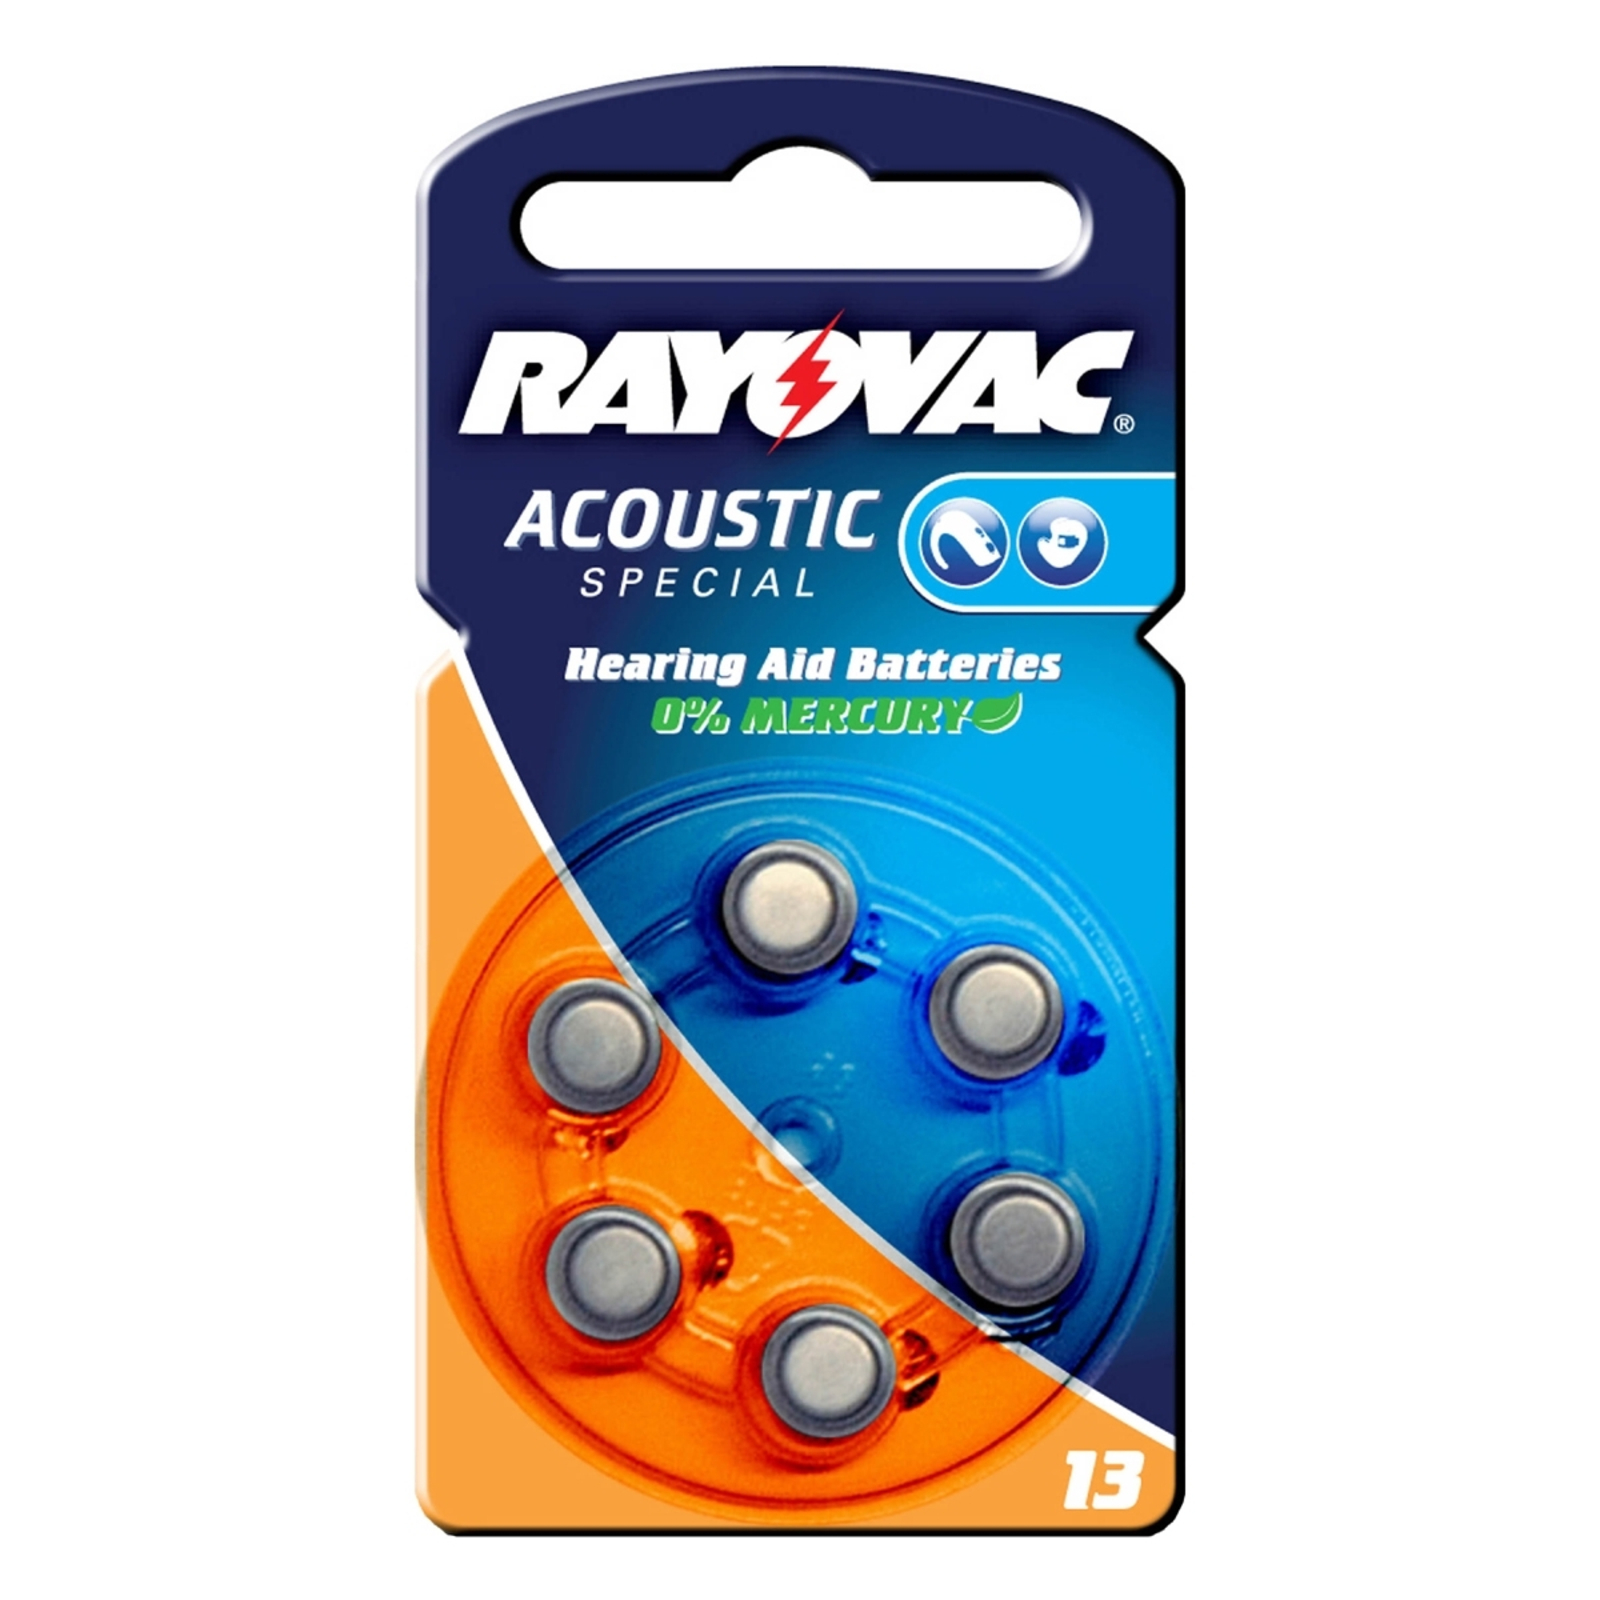 Acoustic 1,4 V 310 m/Ah knappbatteri Rayovac 13